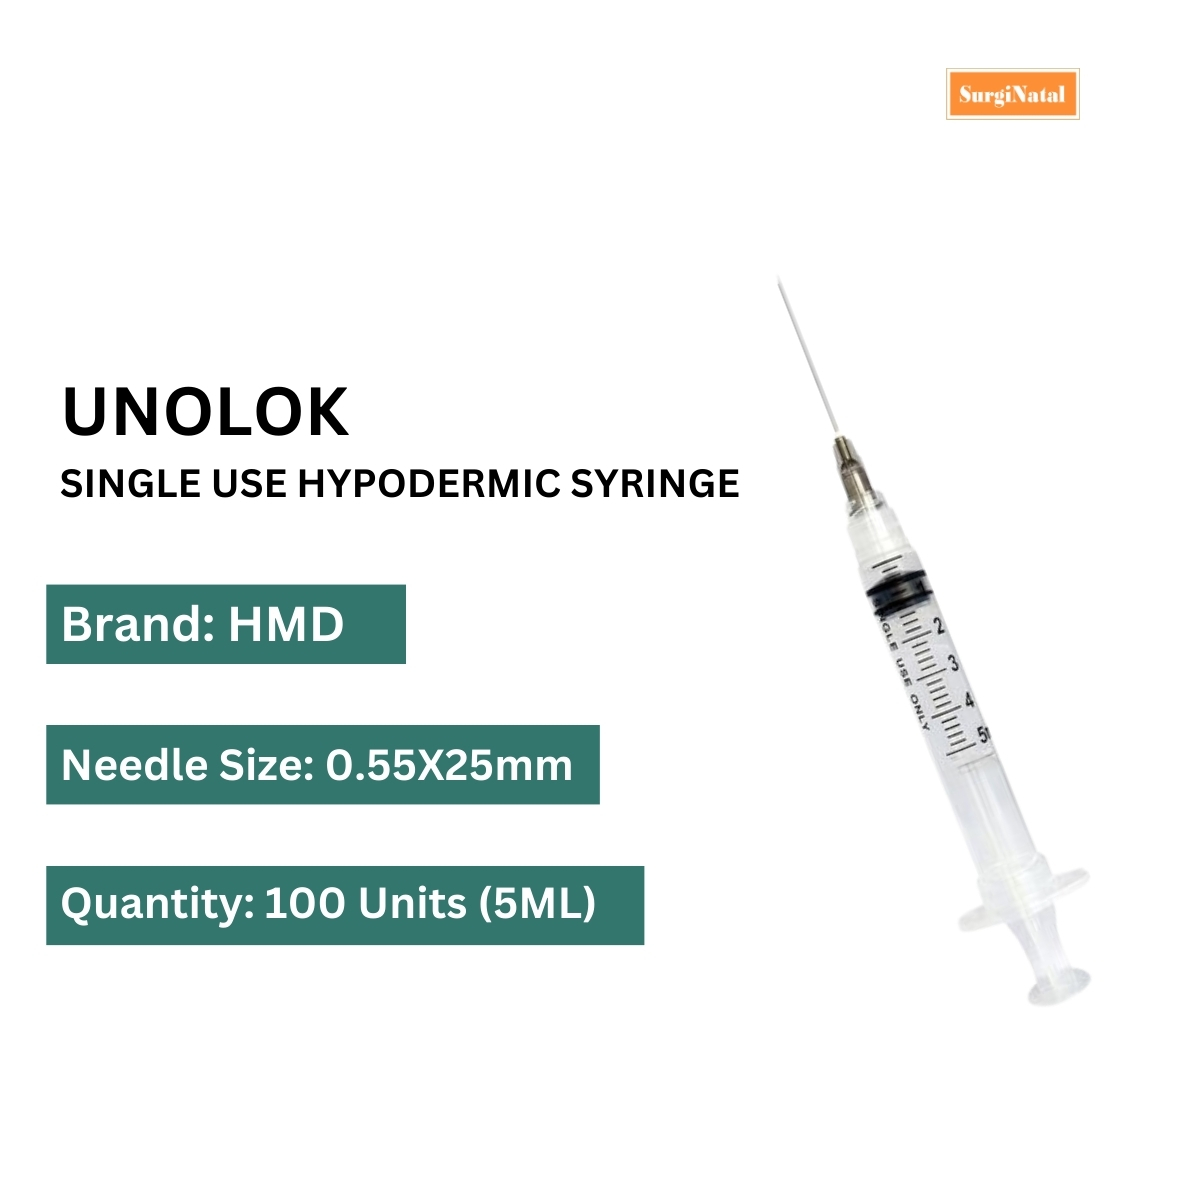 unolok syringe 5 ml - 100 units pack